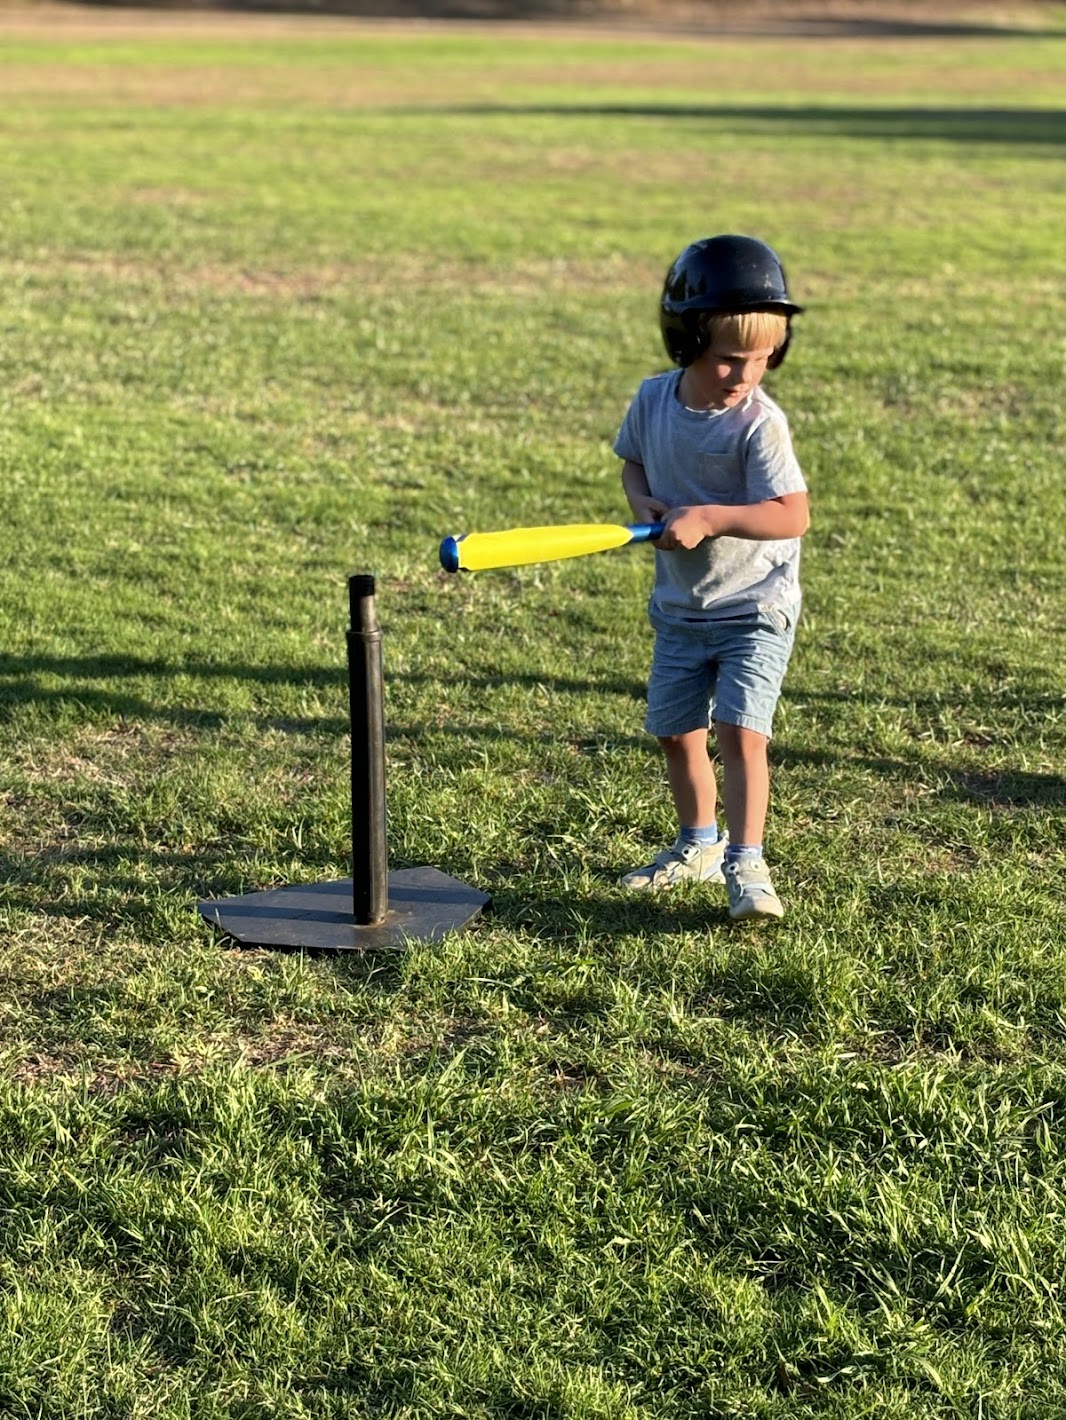 a boy playing baseball with a bat